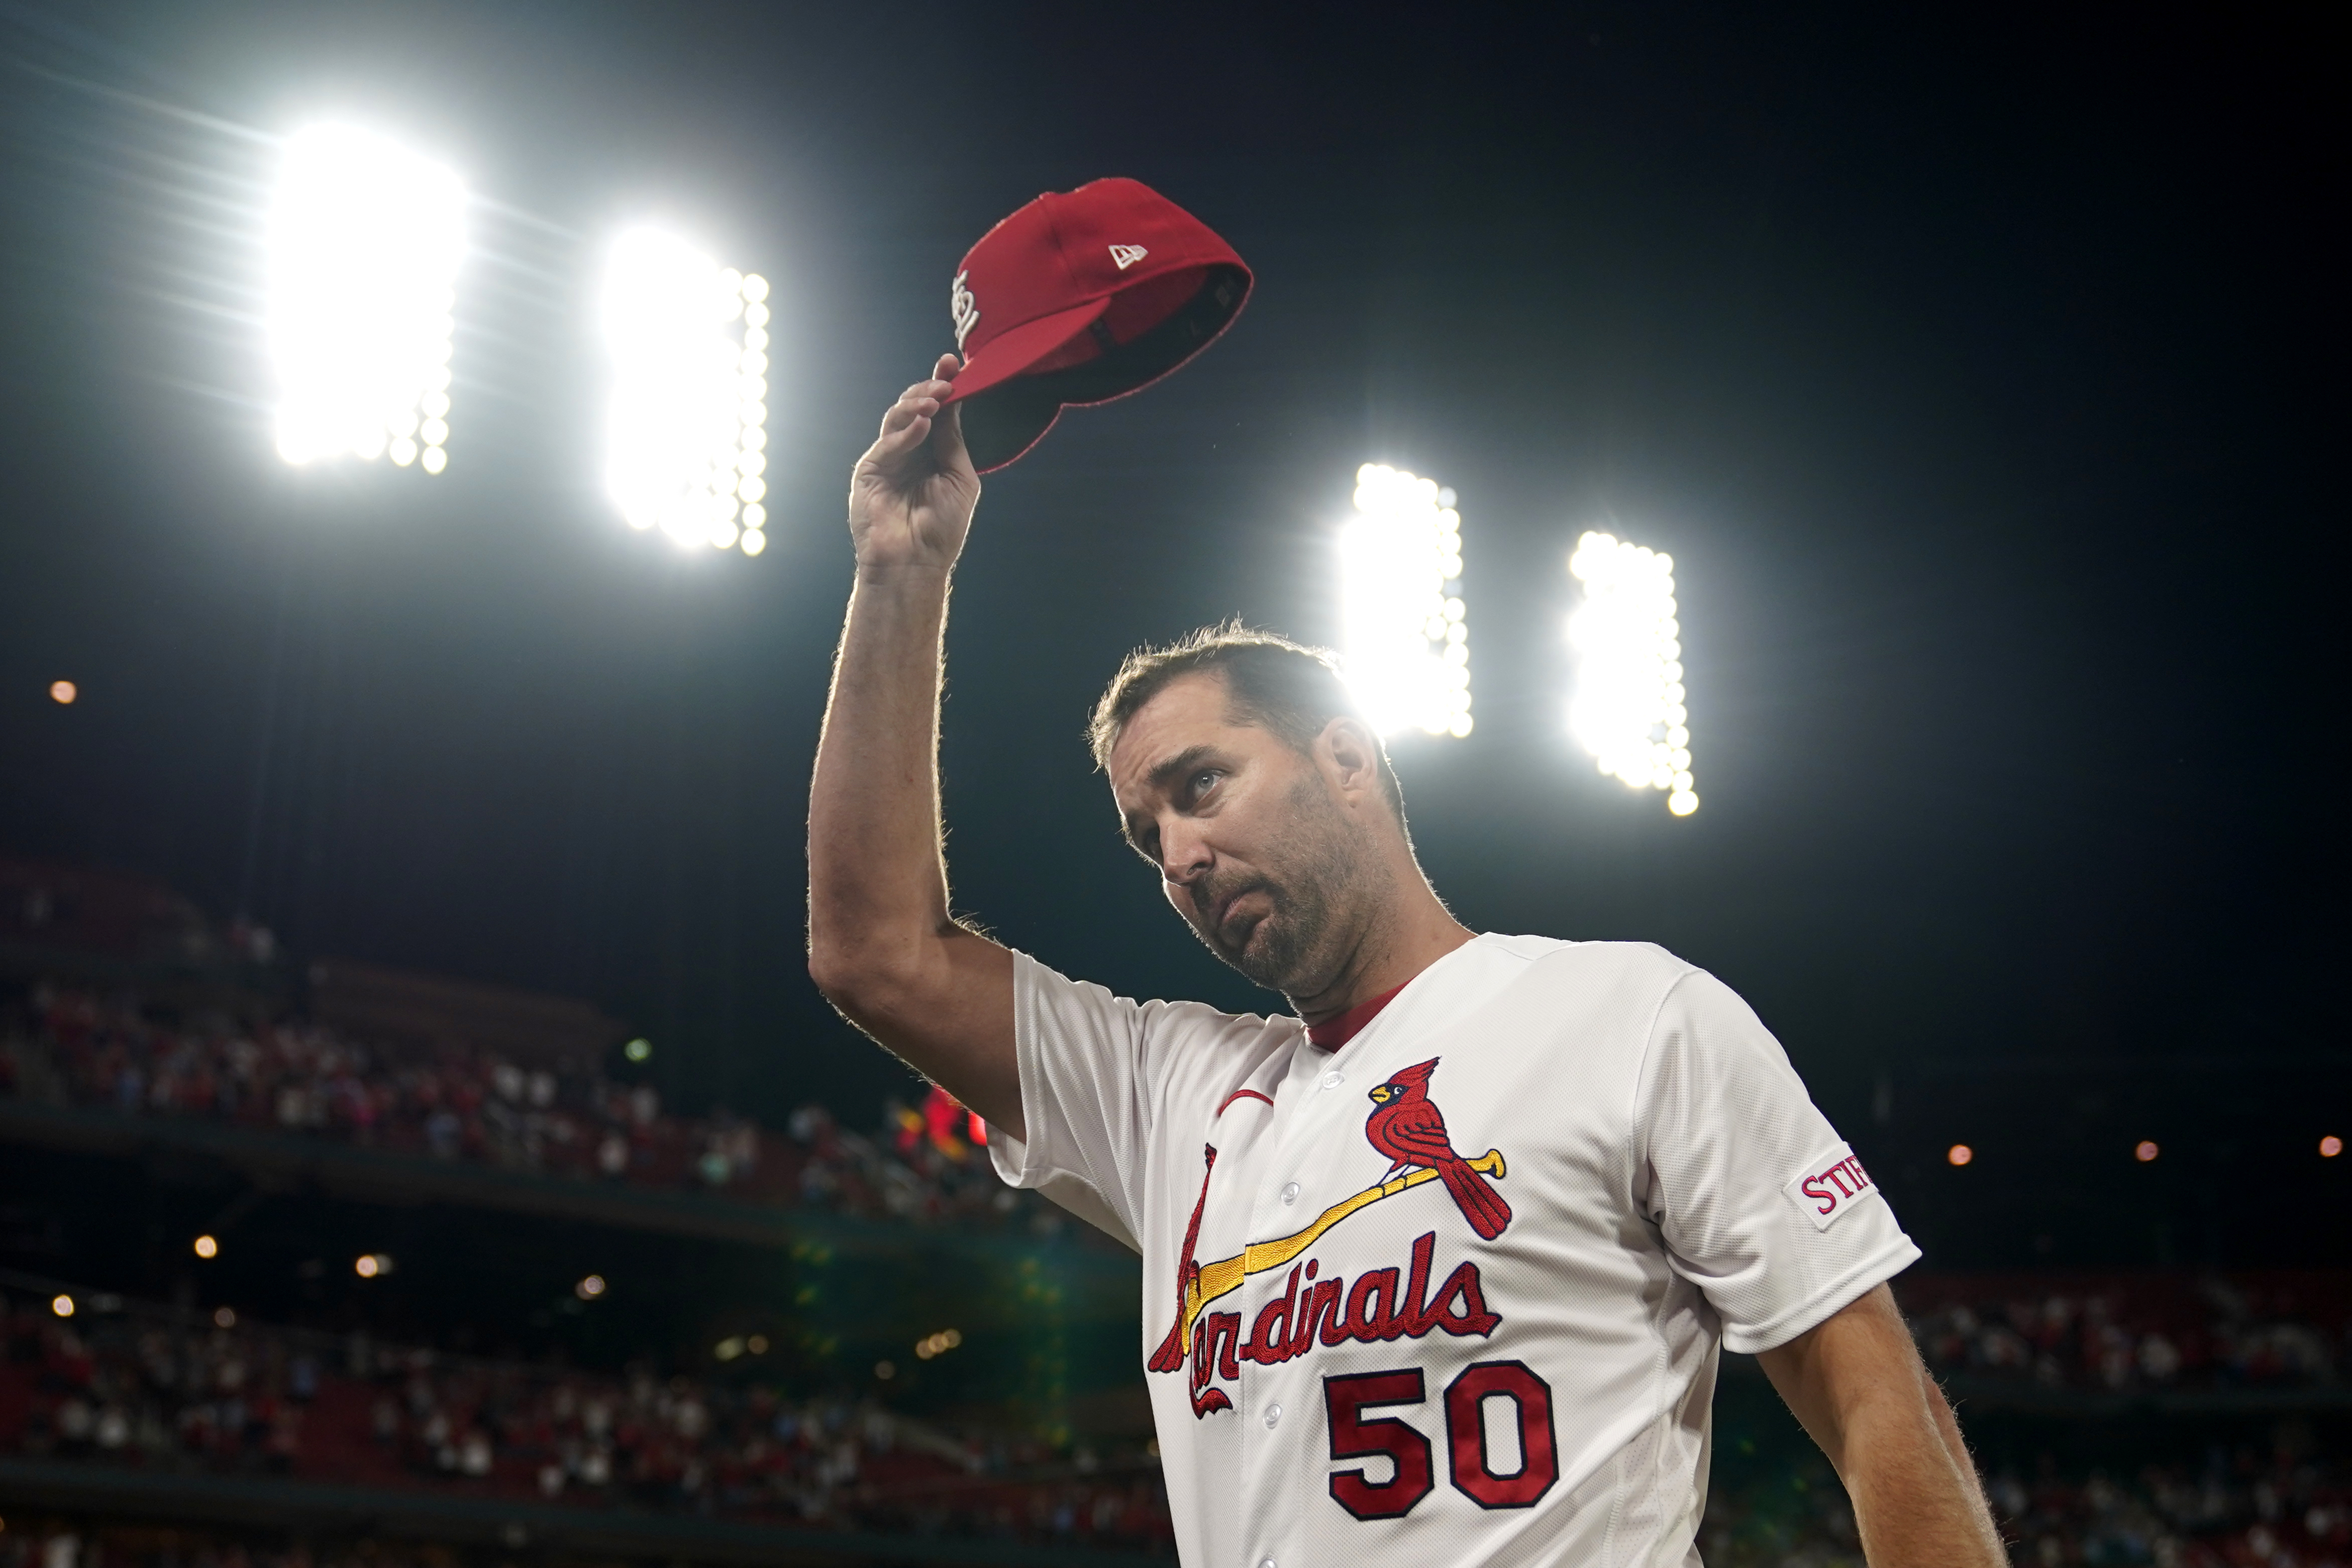 Cardinals' right-hander Adam Wainwright, 42, says he has thrown